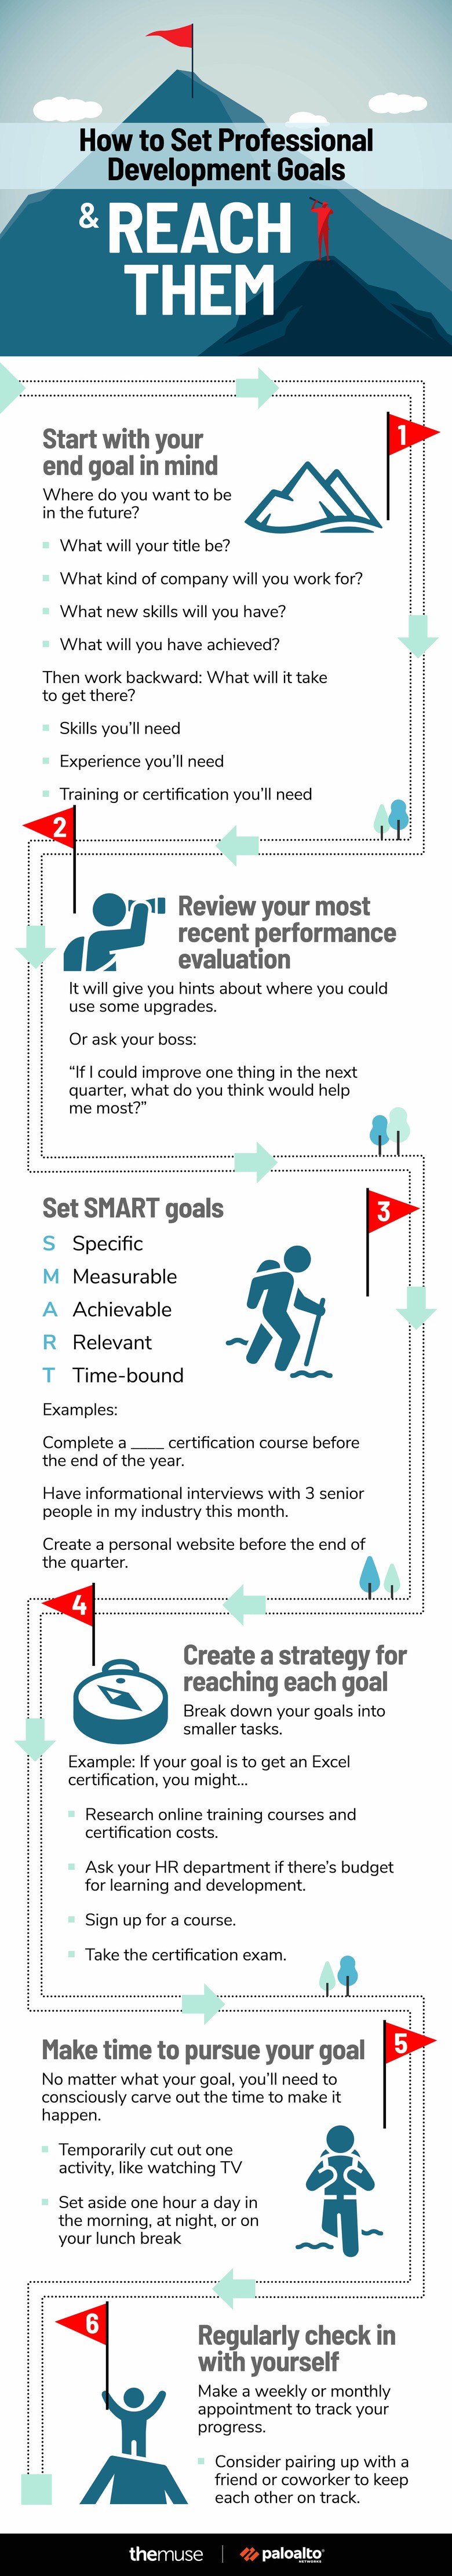 infographic illustrating 6 steps for setting professional development goals